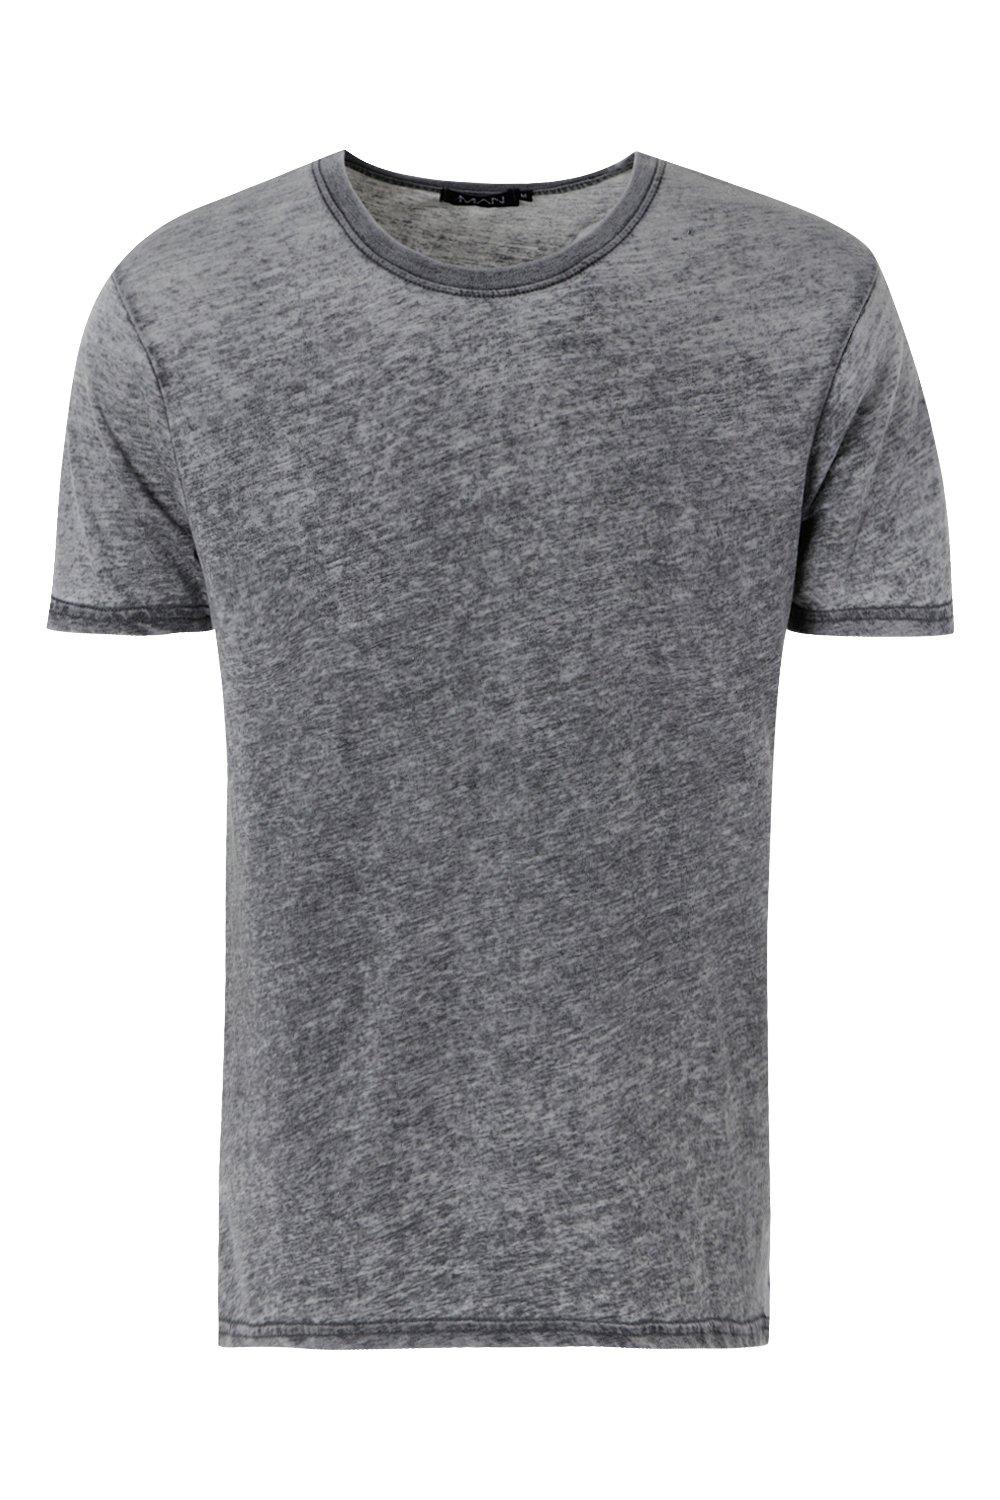 Burnout Stress Washed Charcoal/Grey Shirt